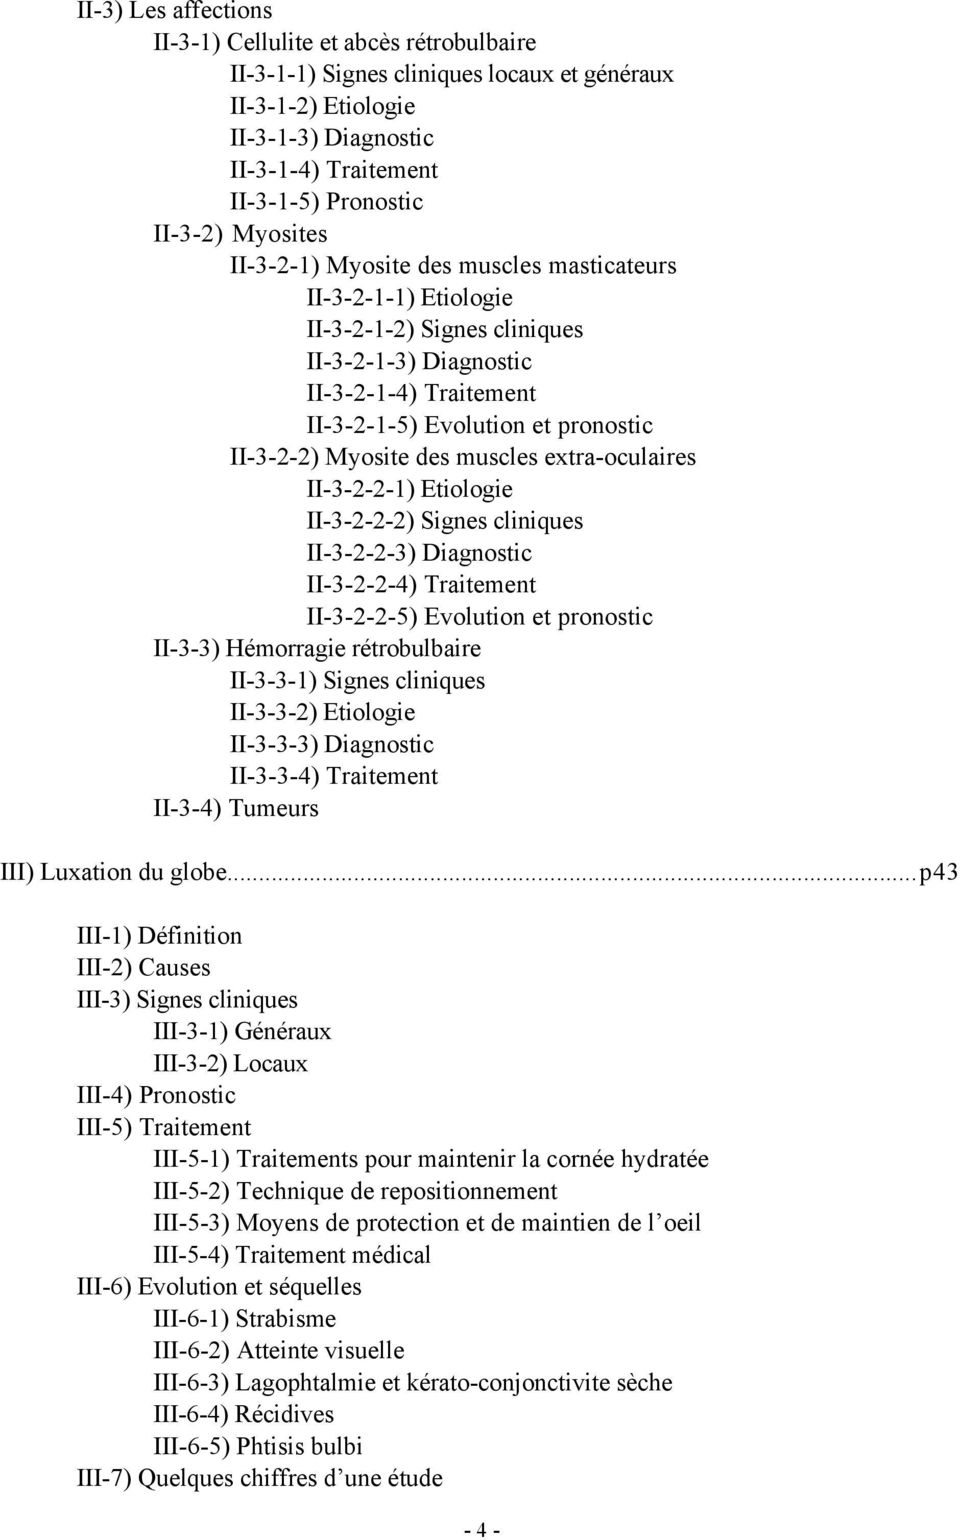 Myosite des muscles extra-oculaires II-3-2-2-1) Etiologie II-3-2-2-2) Signes cliniques II-3-2-2-3) Diagnostic II-3-2-2-4) Traitement II-3-2-2-5) Evolution et pronostic II-3-3) Hémorragie